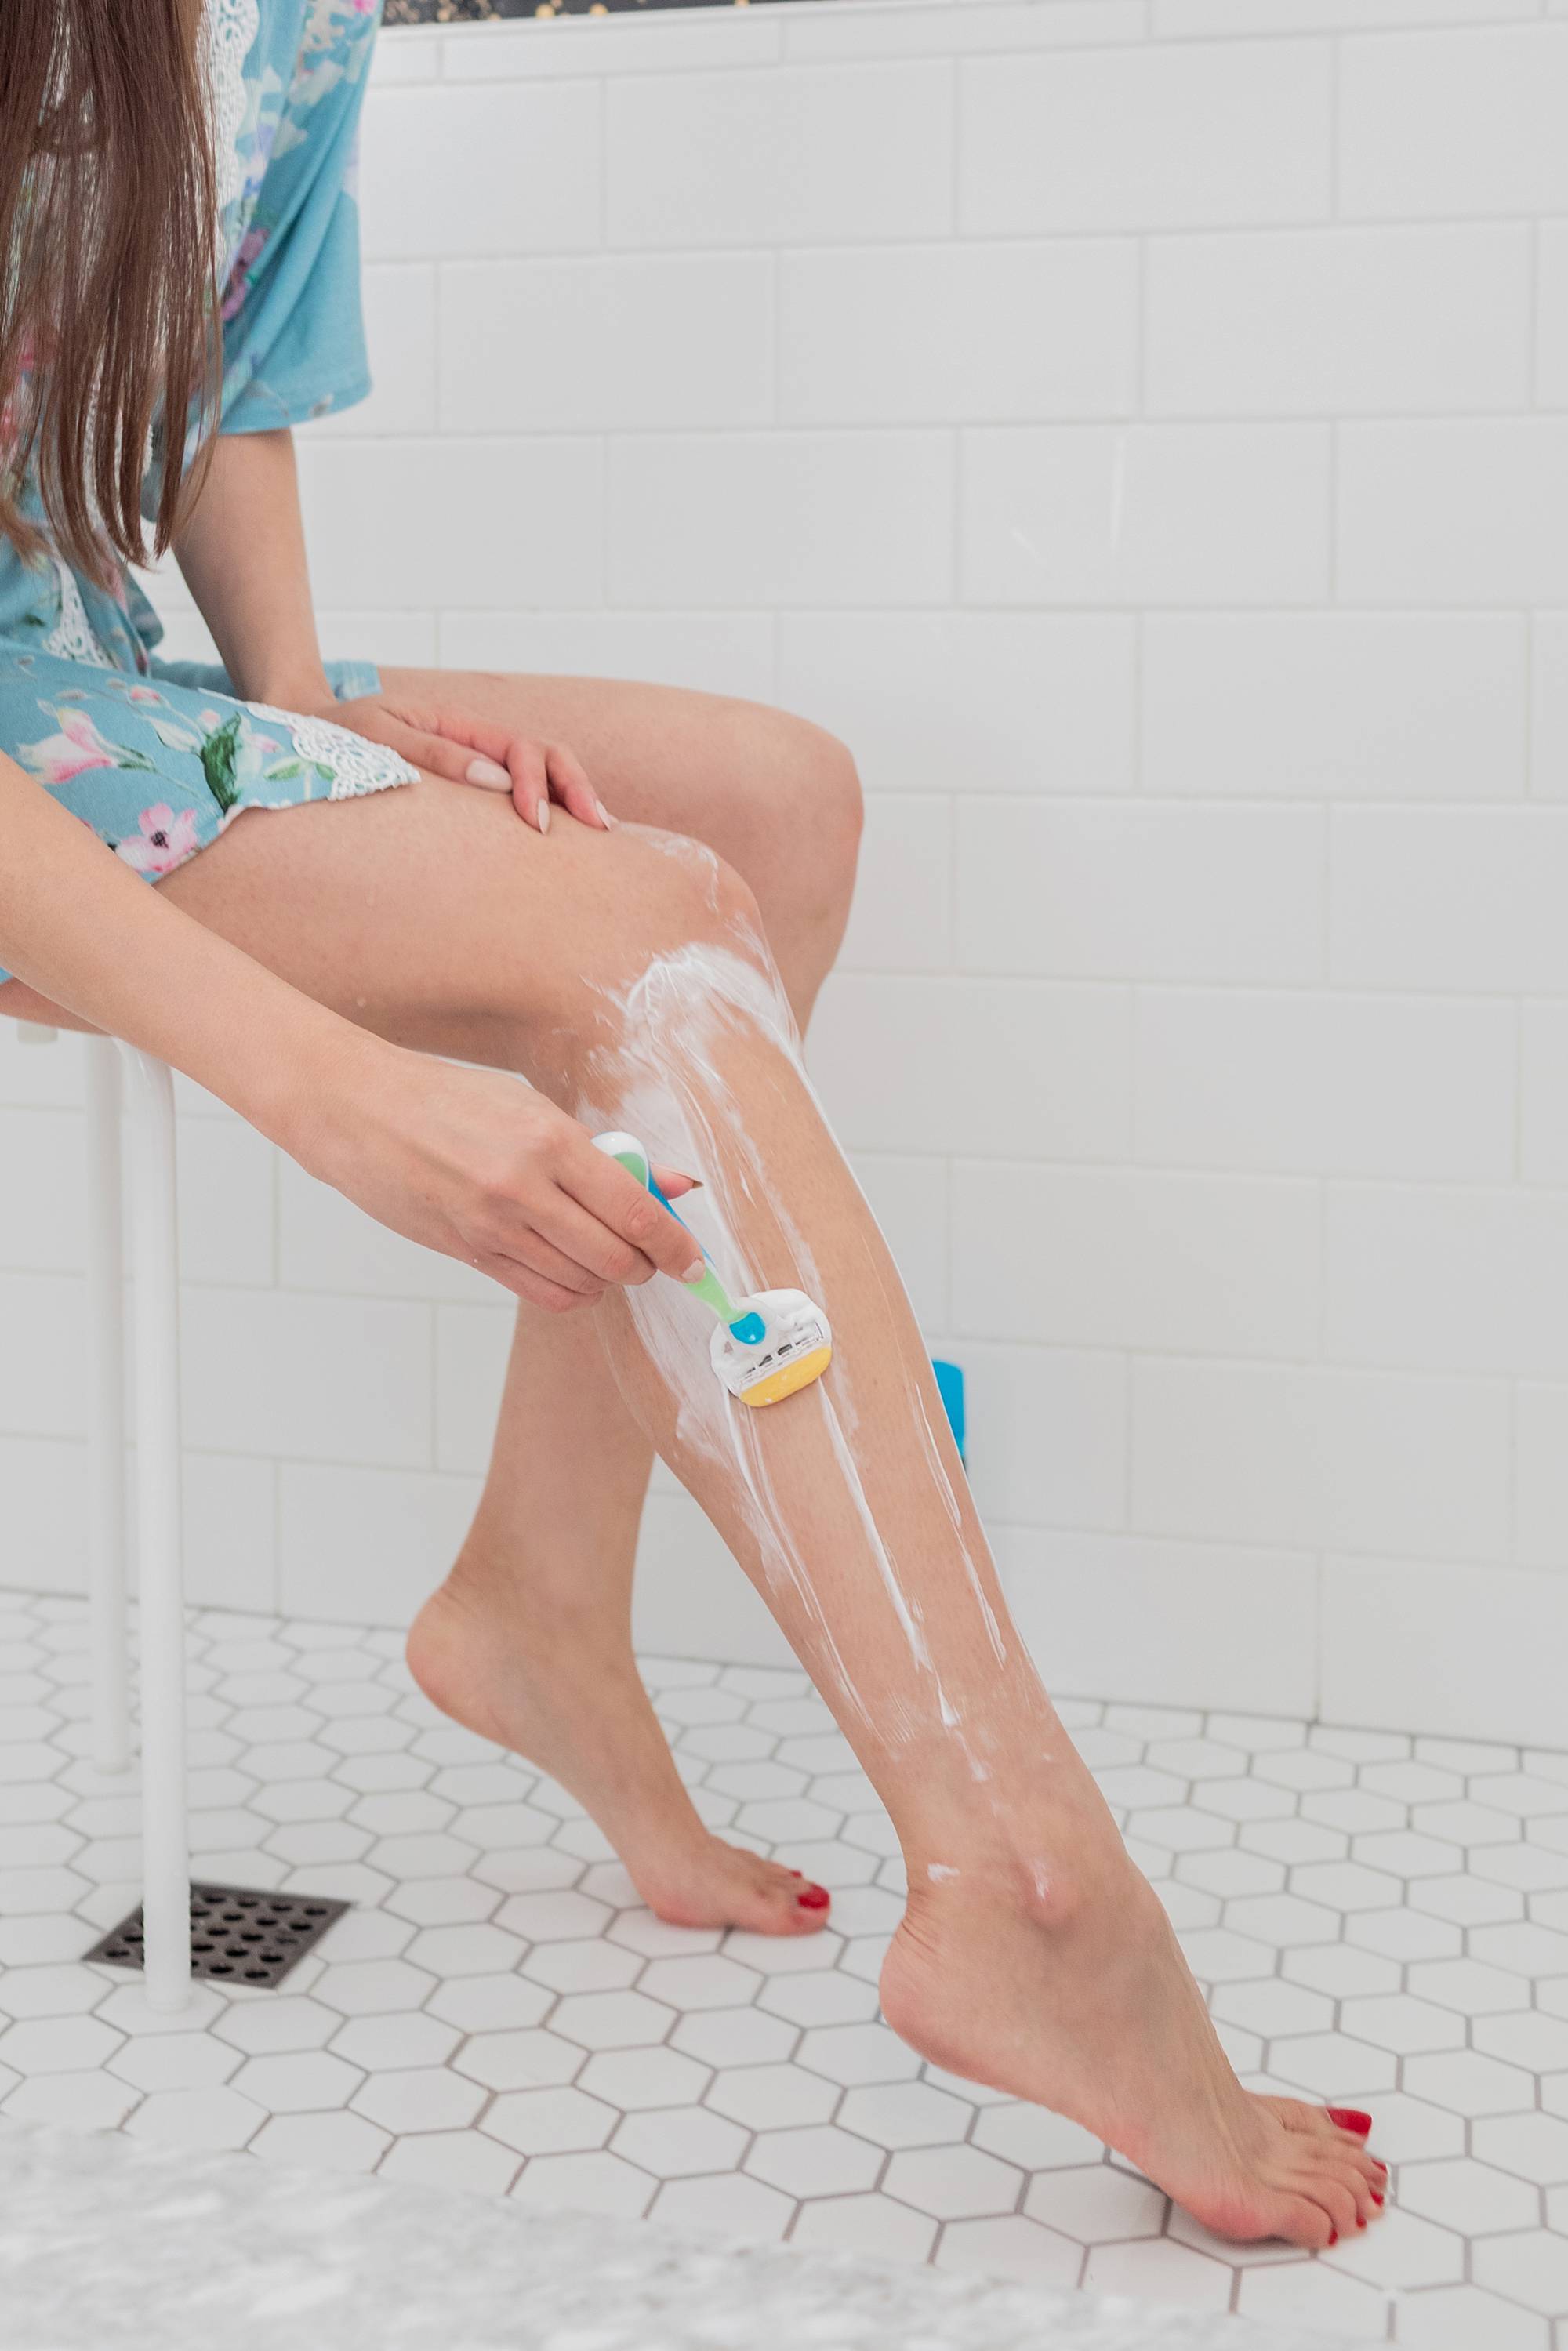 shaving club for women subscription Gillette Venus razor review